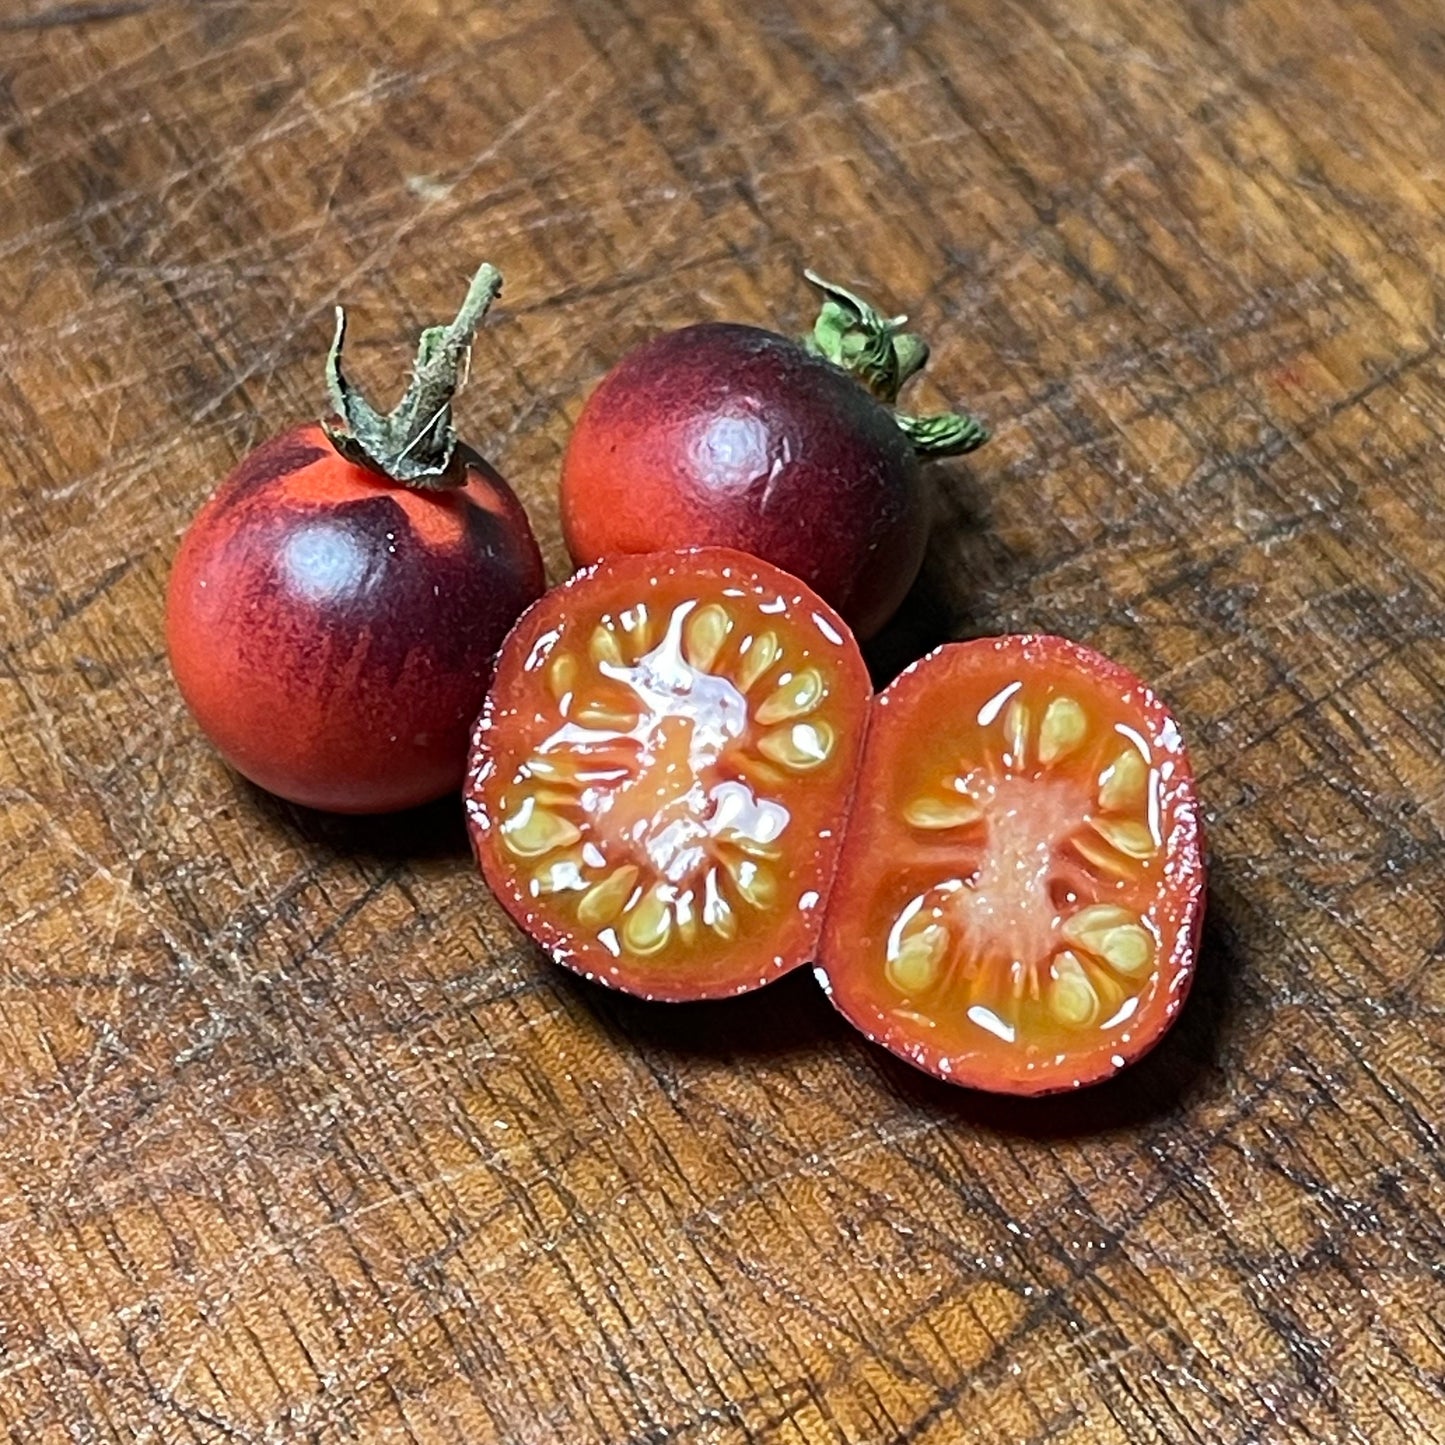 Blueberry - Tomato Seeds - Heirloom Tomato - 25+ Seeds